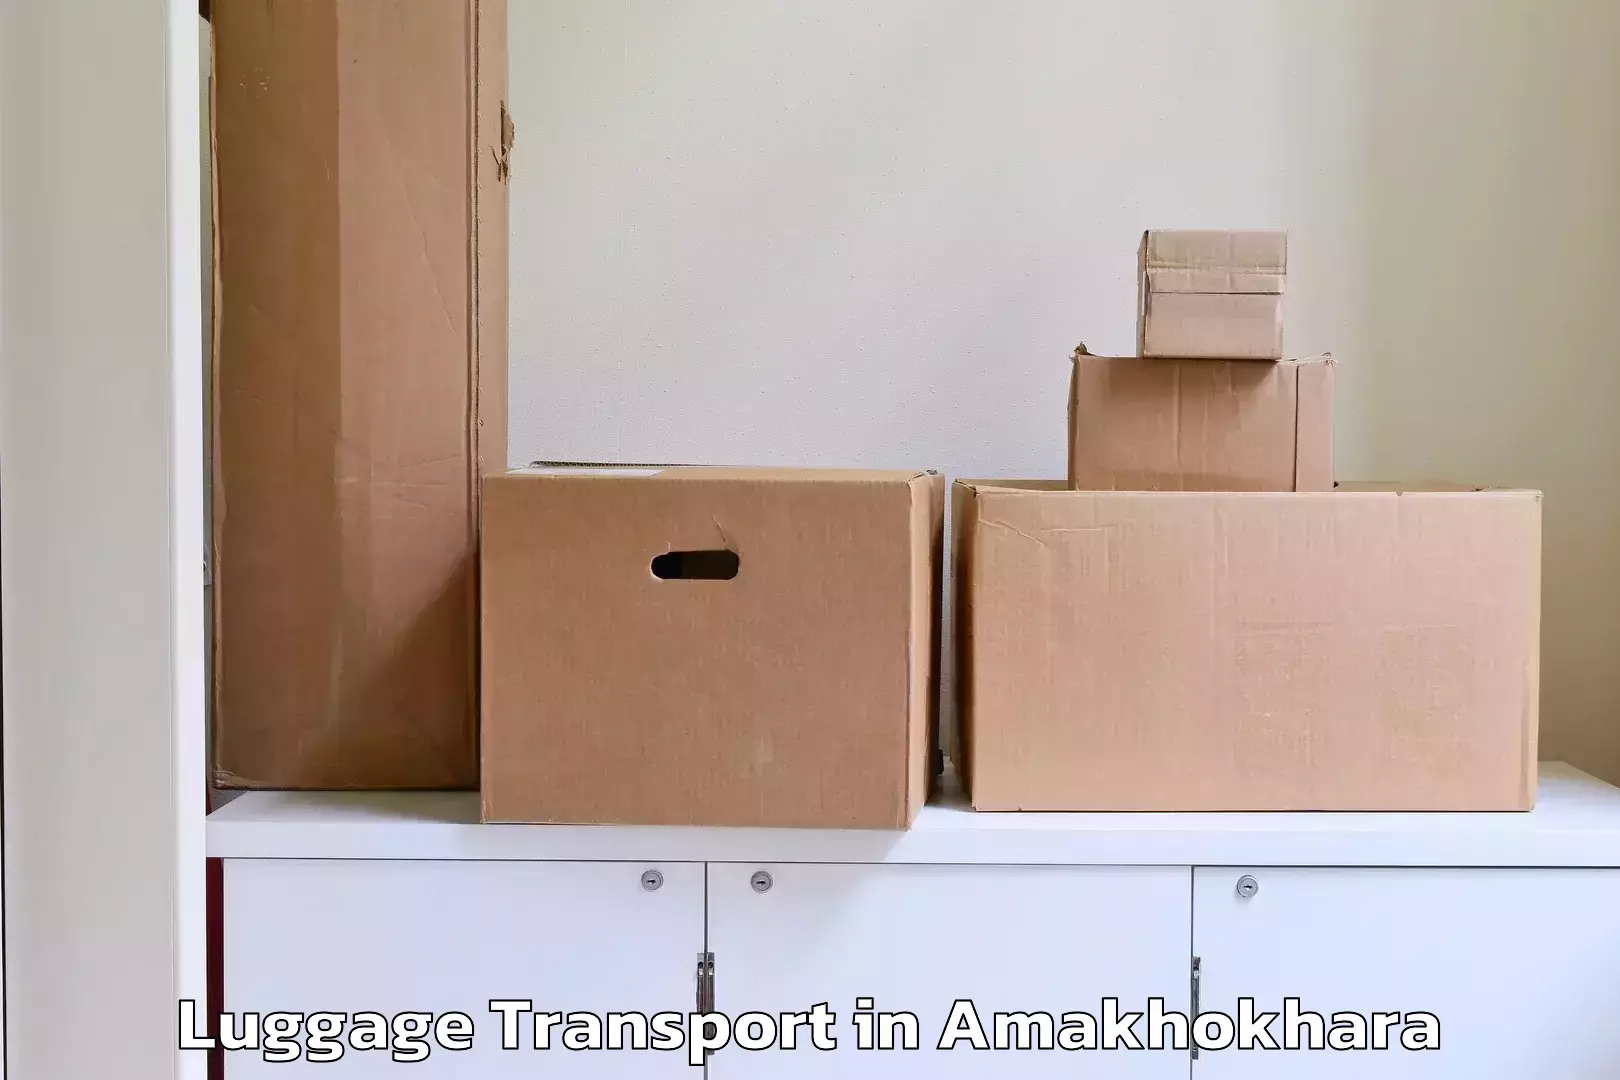 Luggage shipping trends in Amakhokhara